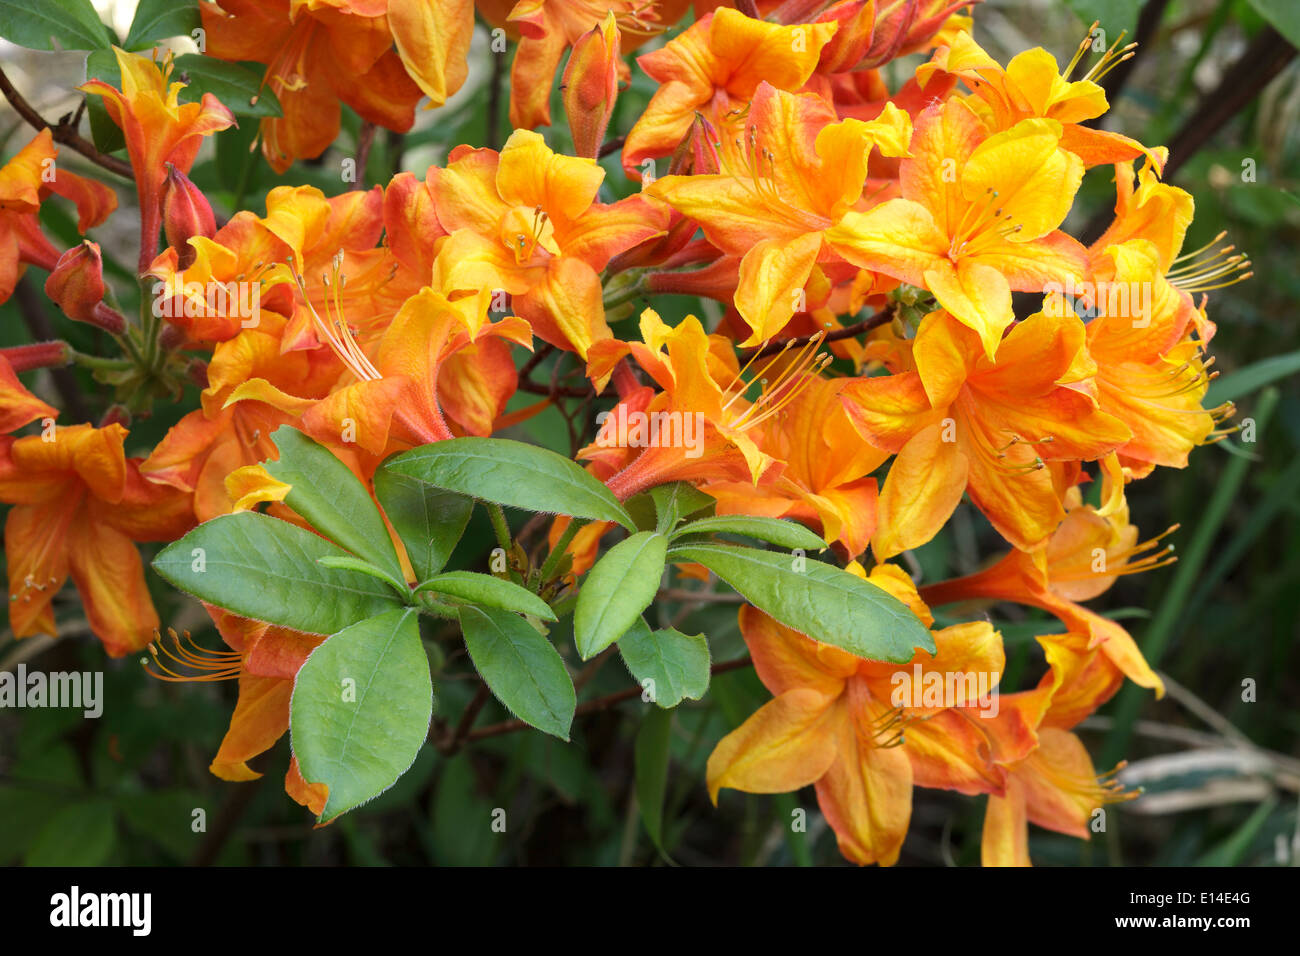 Azalea naranja fotografías e imágenes de alta resolución - Alamy